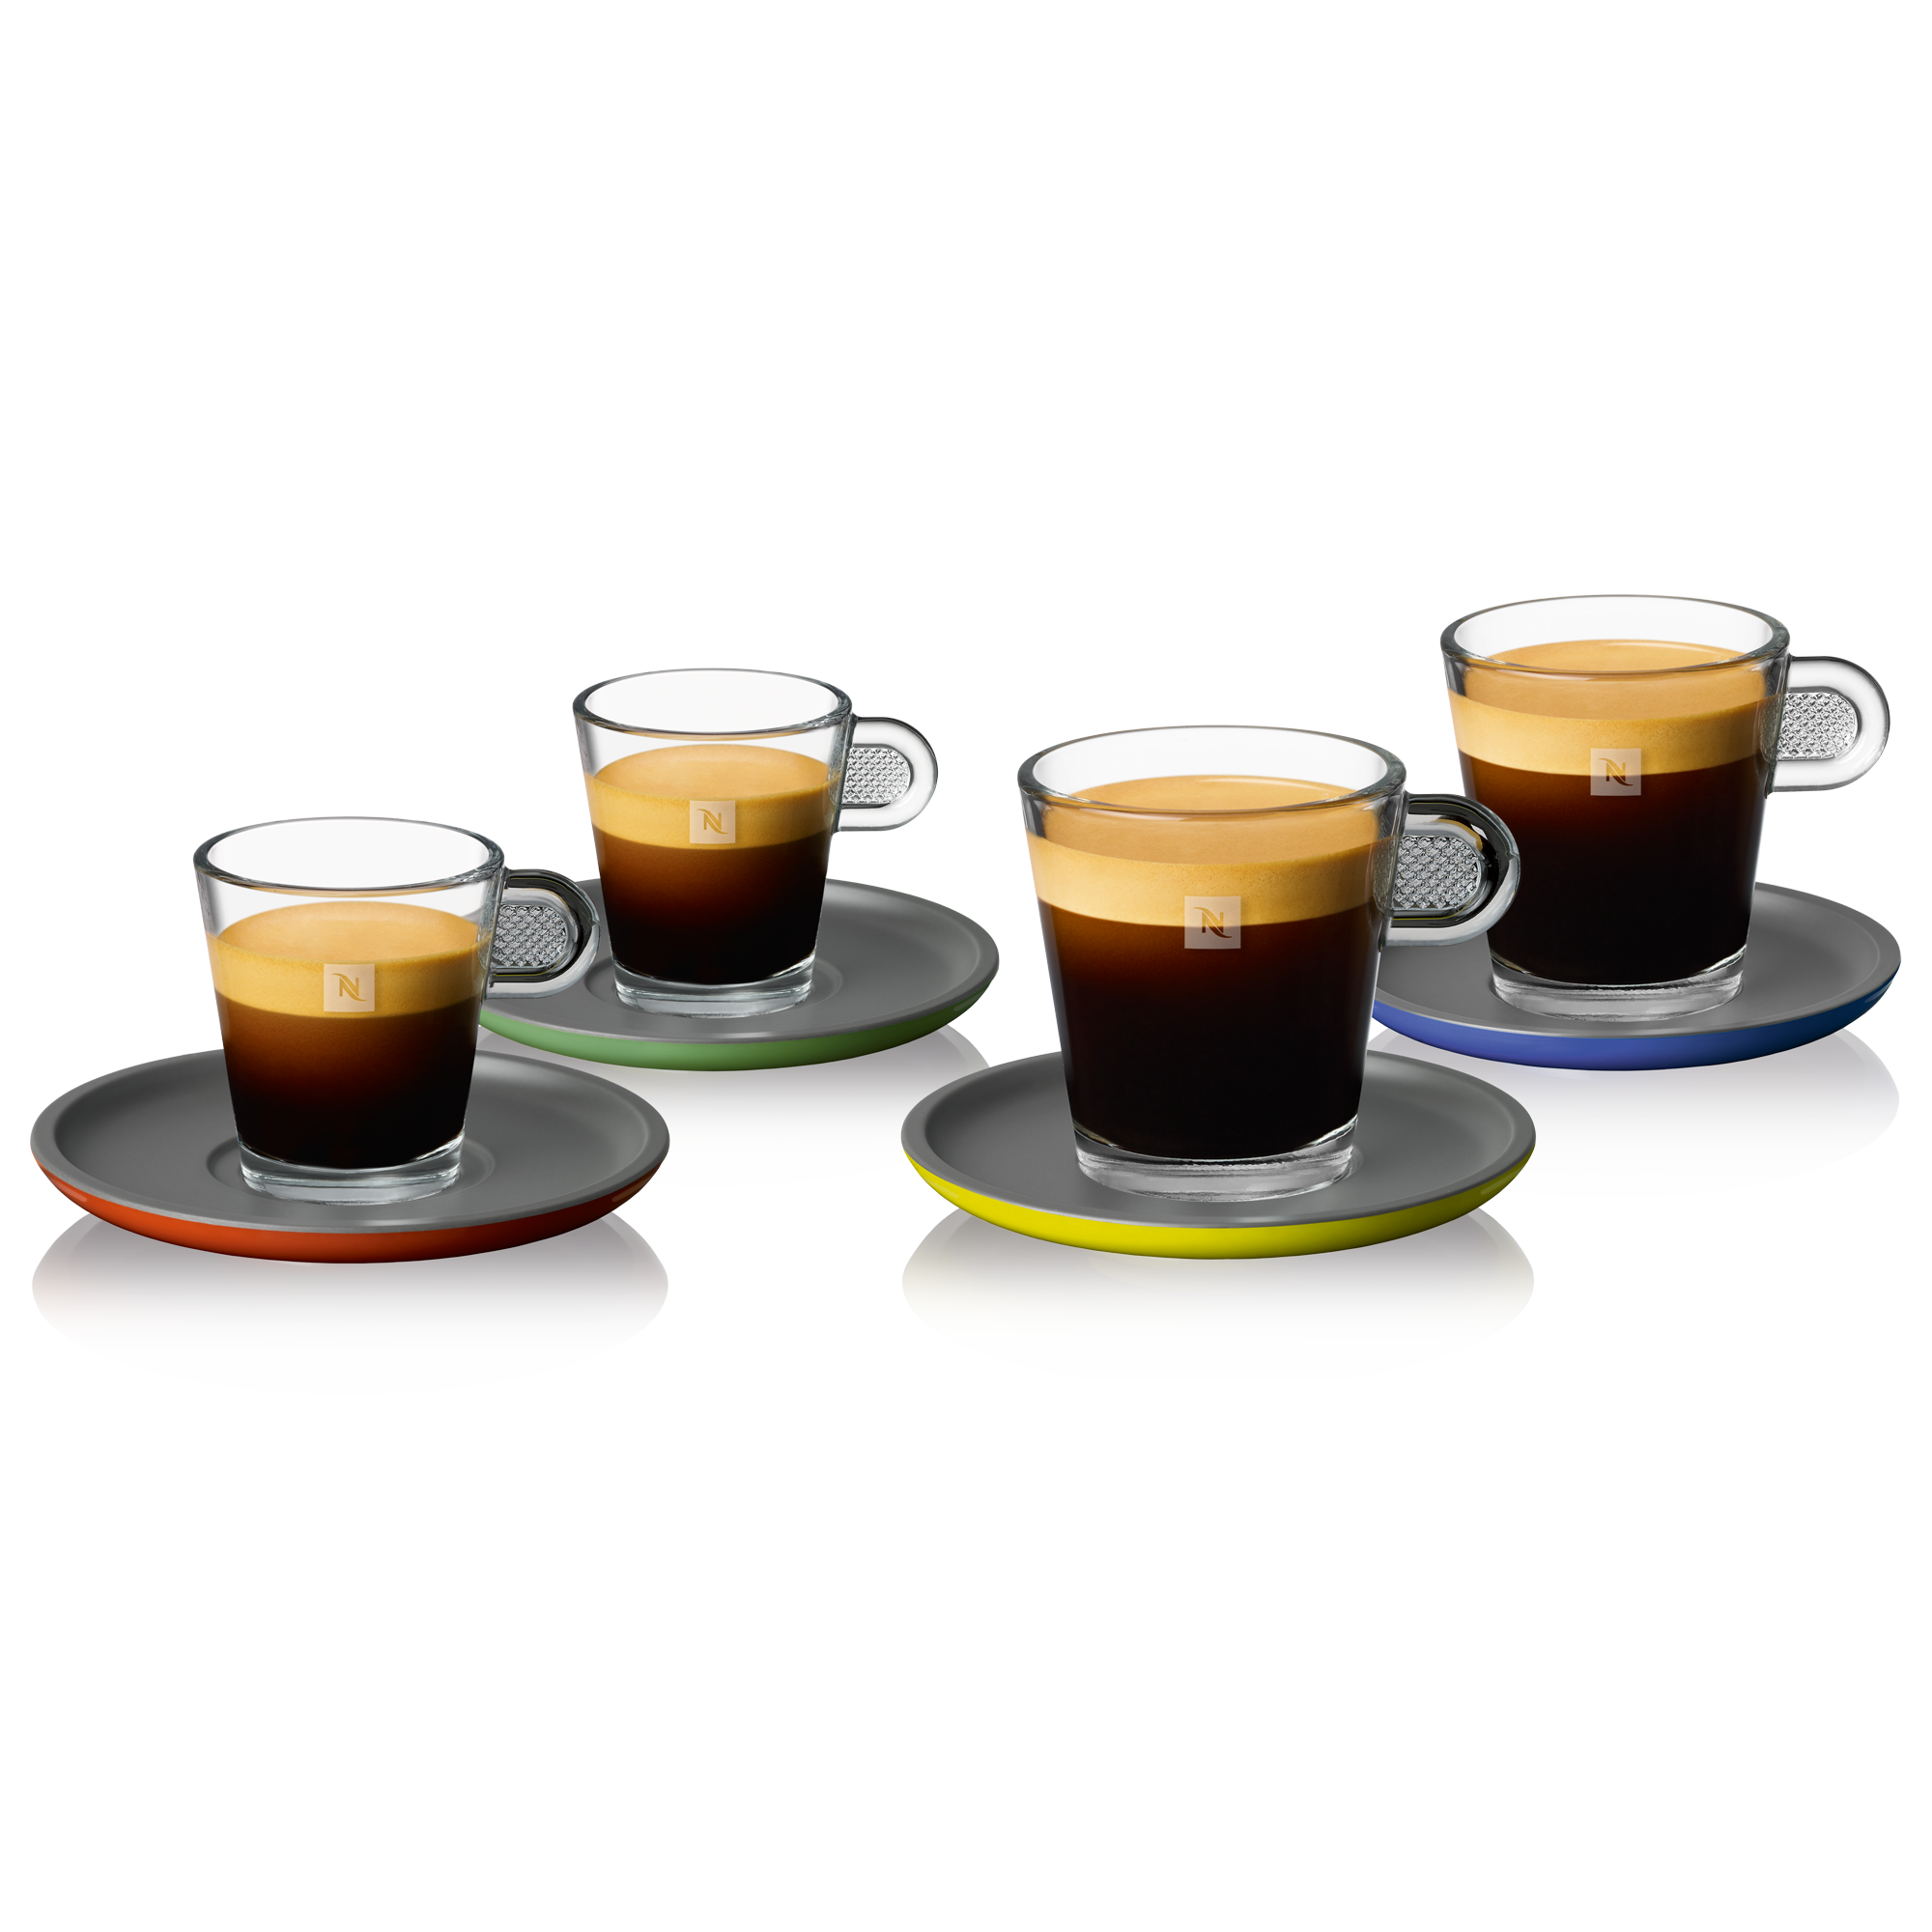 Espresso and lungo coffee cups By vectortatu